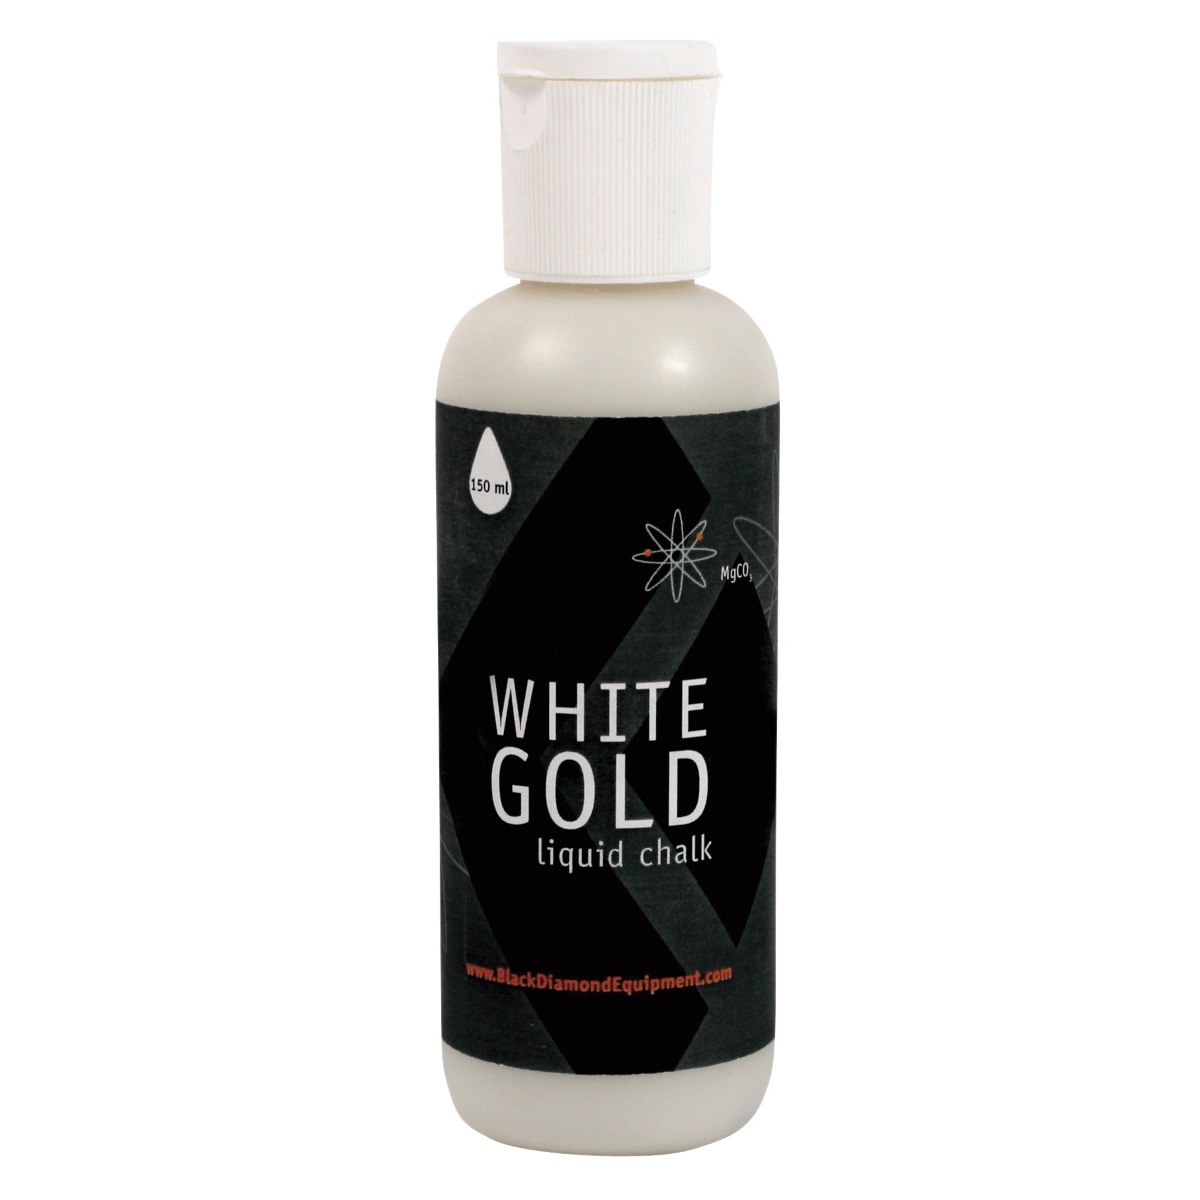 Productfoto van Black Diamond Liquid White Gold Chalk 150ml